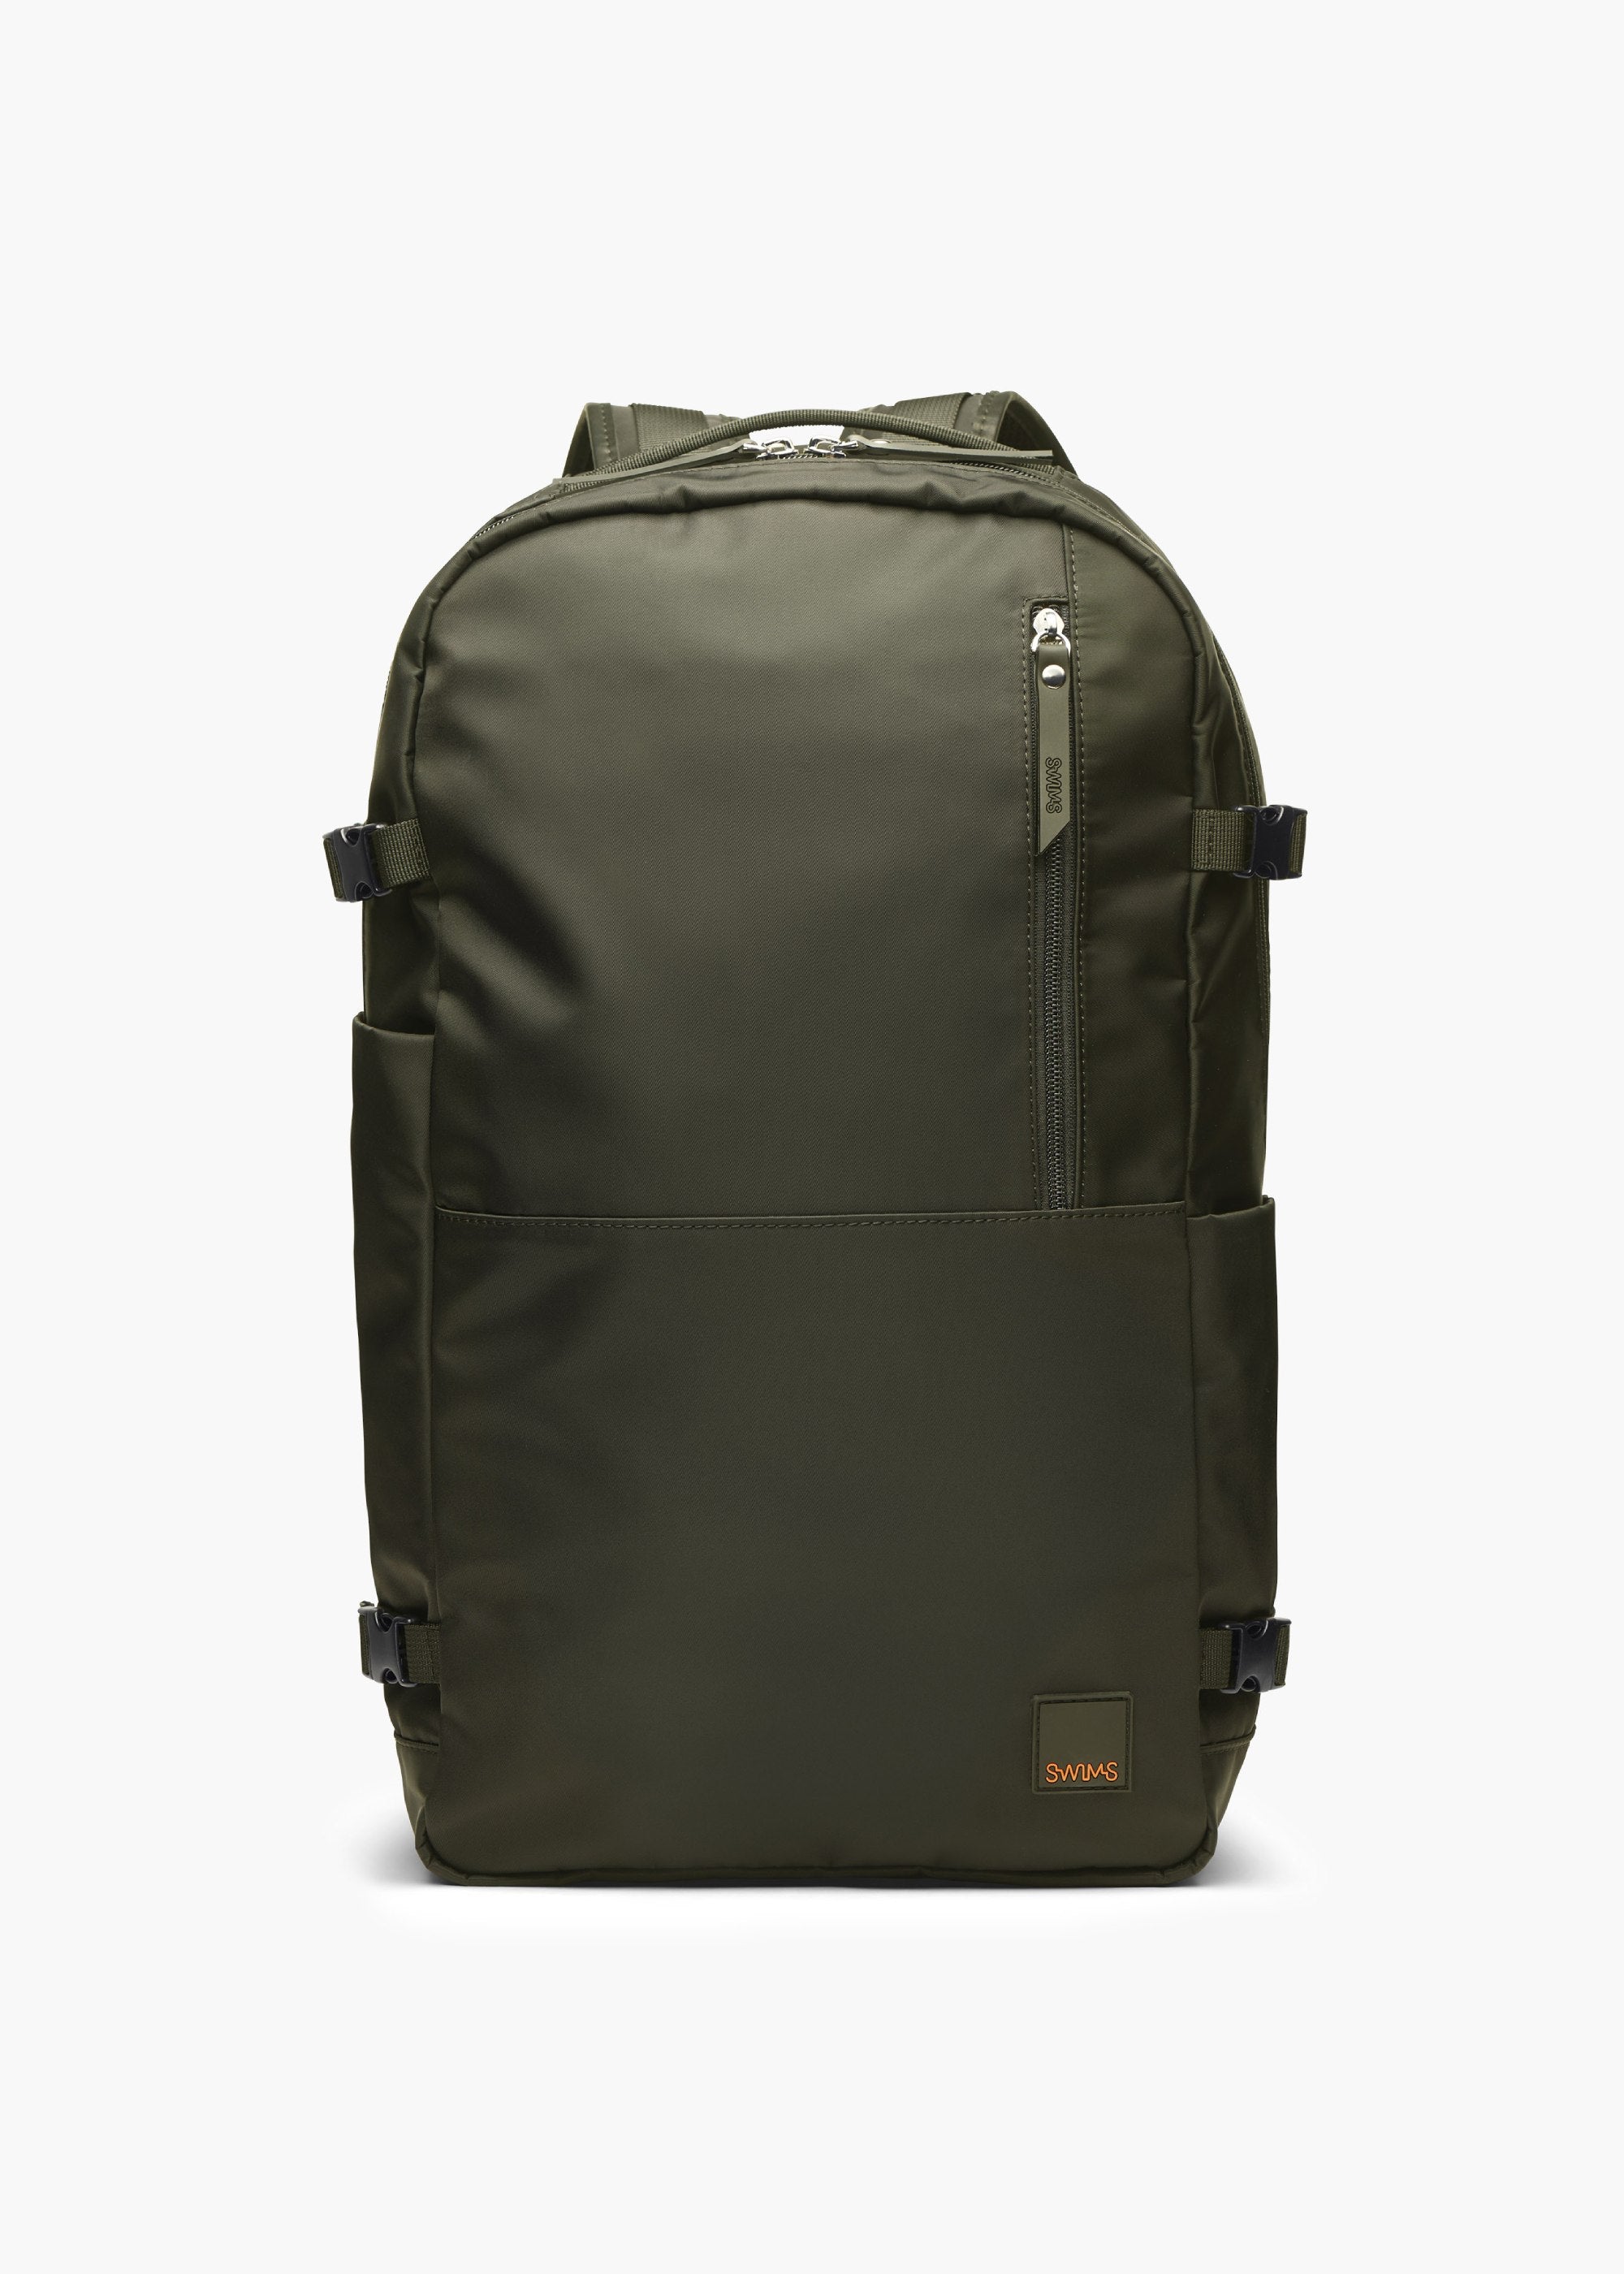 Motion Backpack - background::white,variant::Olive